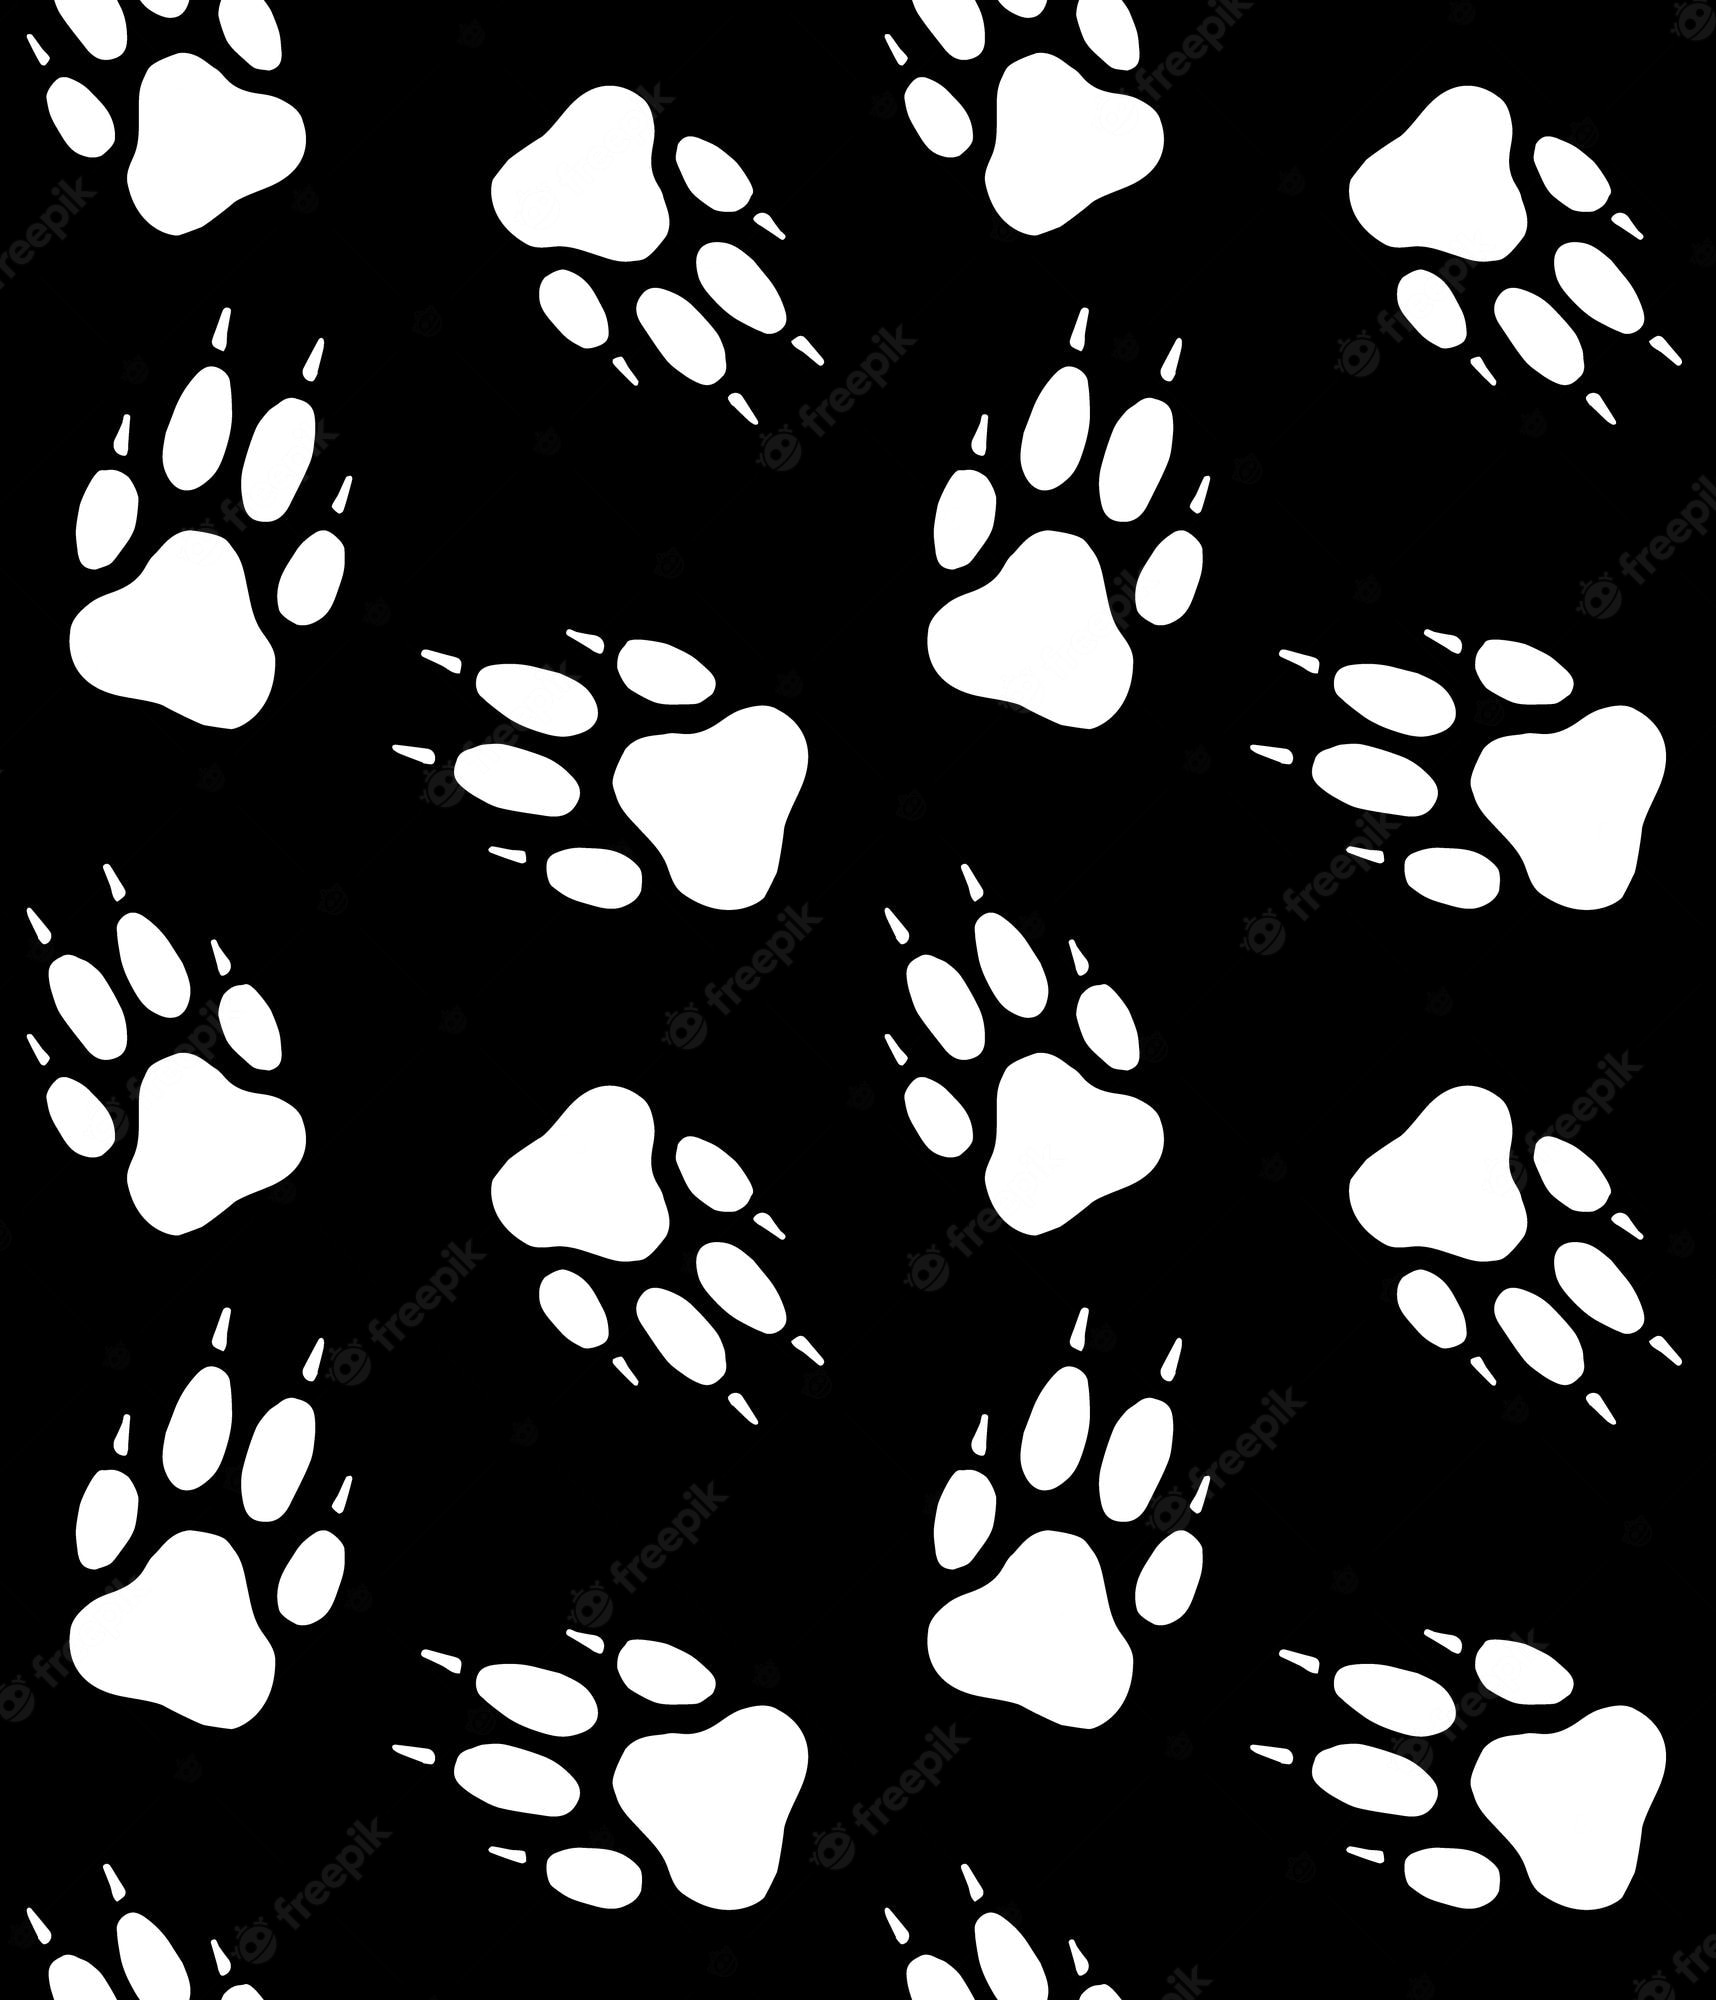 Wolf paw print Image. Free Vectors, & PSD